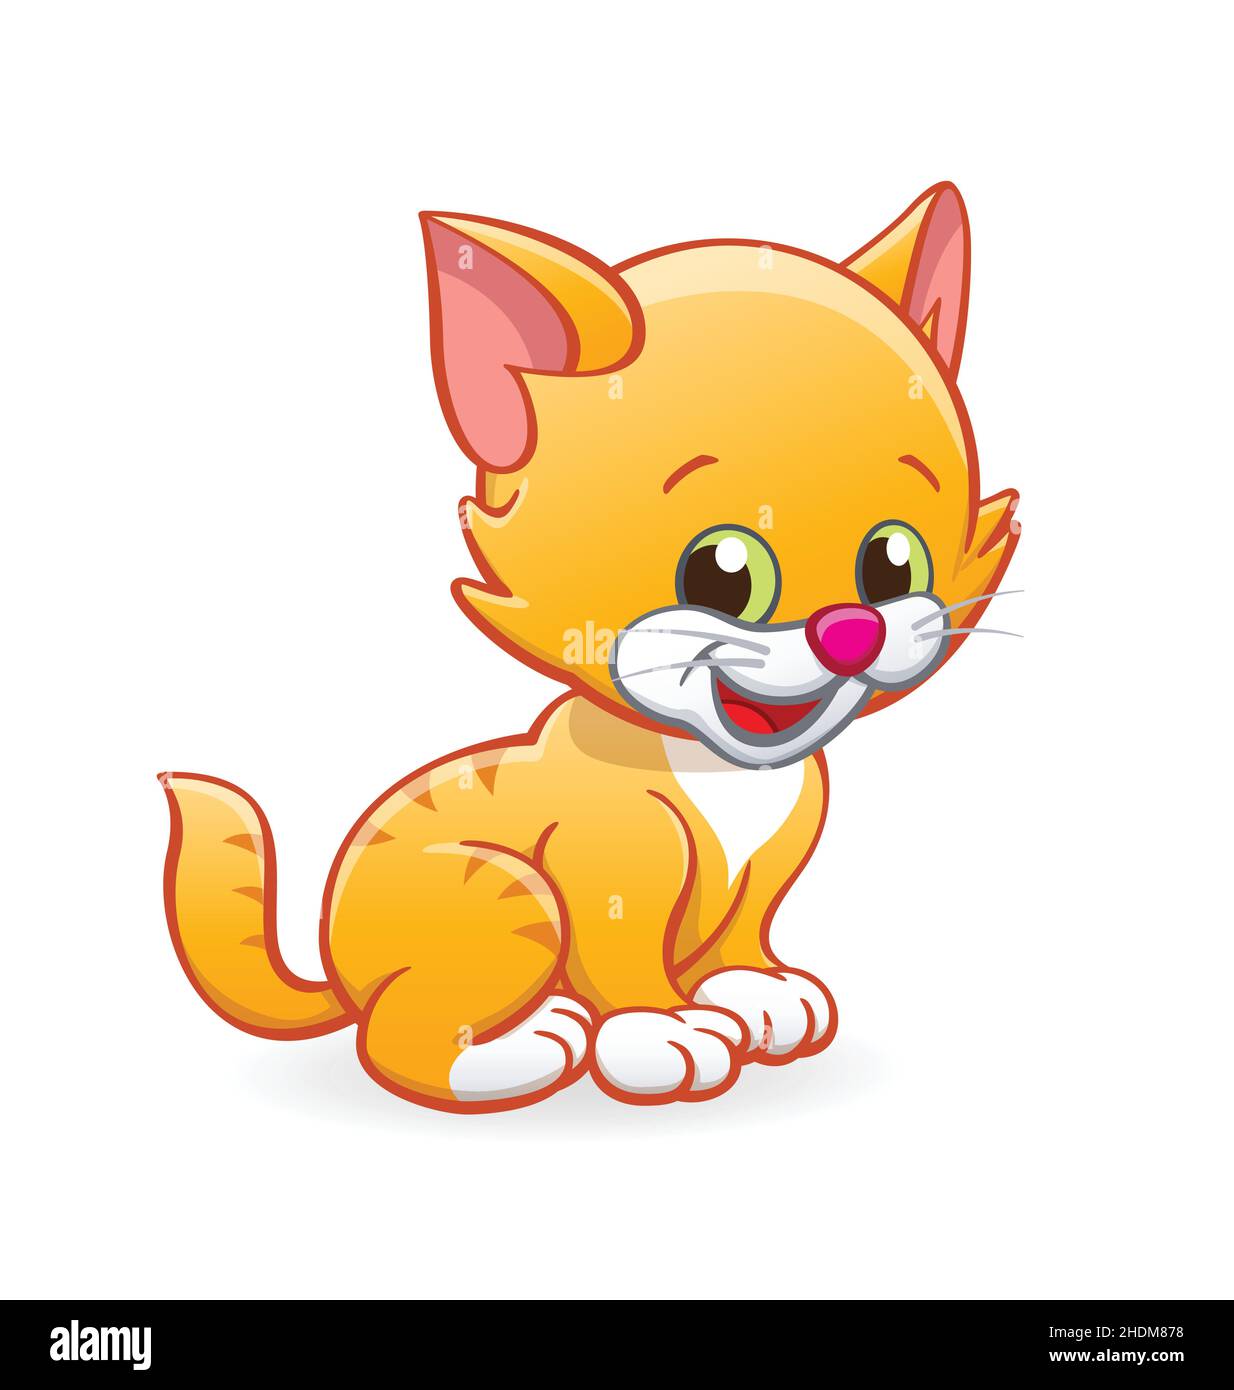 Cute smiling cartoon orange ginger kitten cat sitting vector isolated on white background Stock Vector